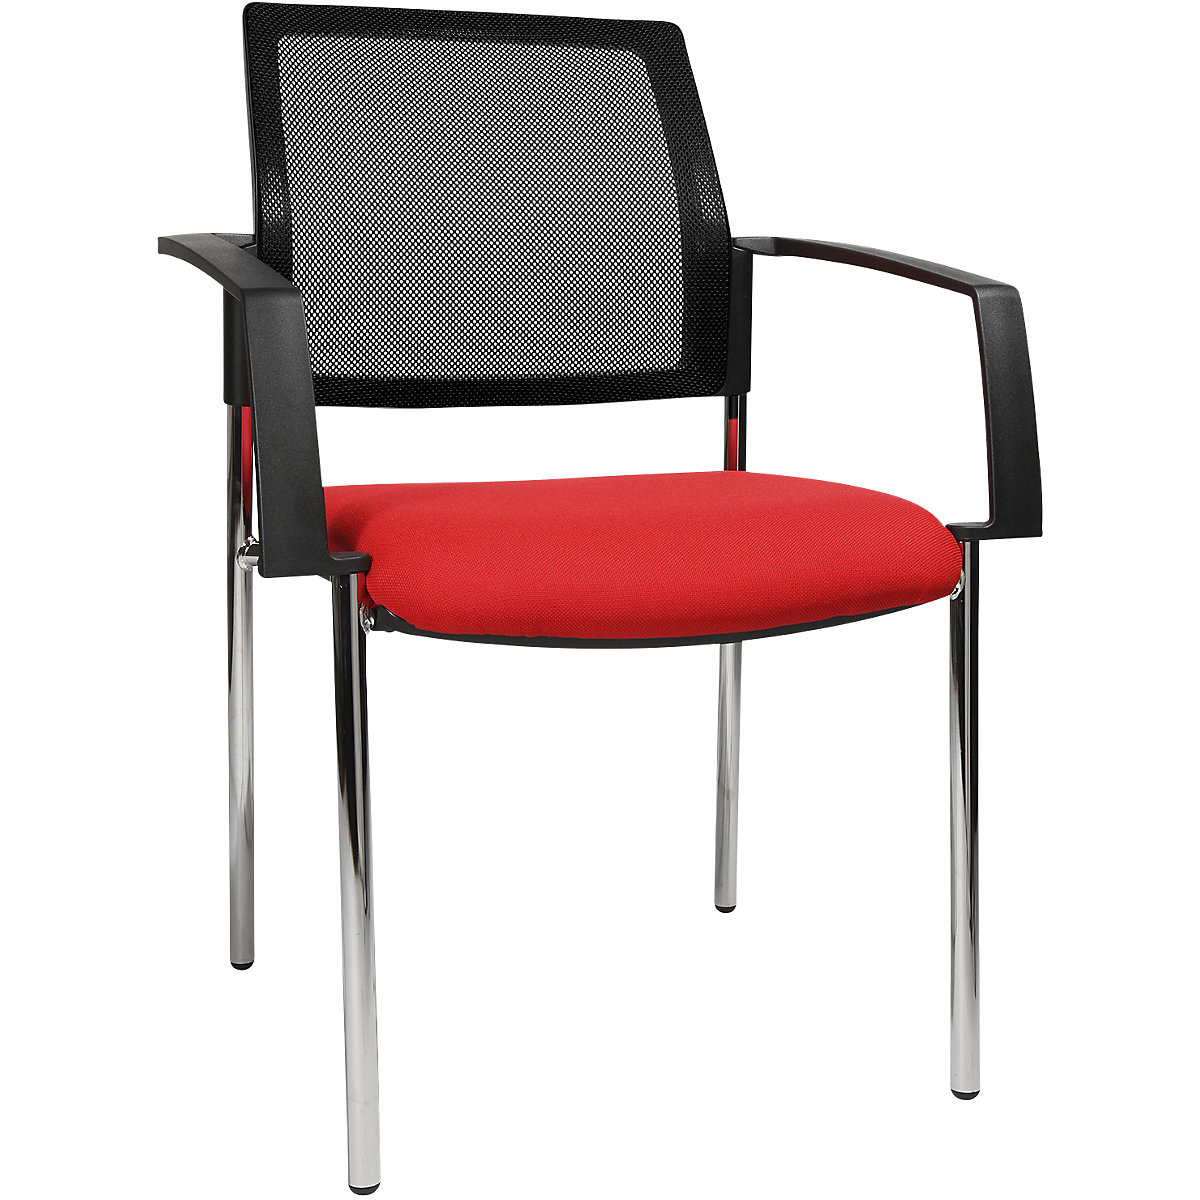 Silla apilable de malla – Topstar, 4 patas, UE 2 unid., asiento rojo, armazón cromado-6